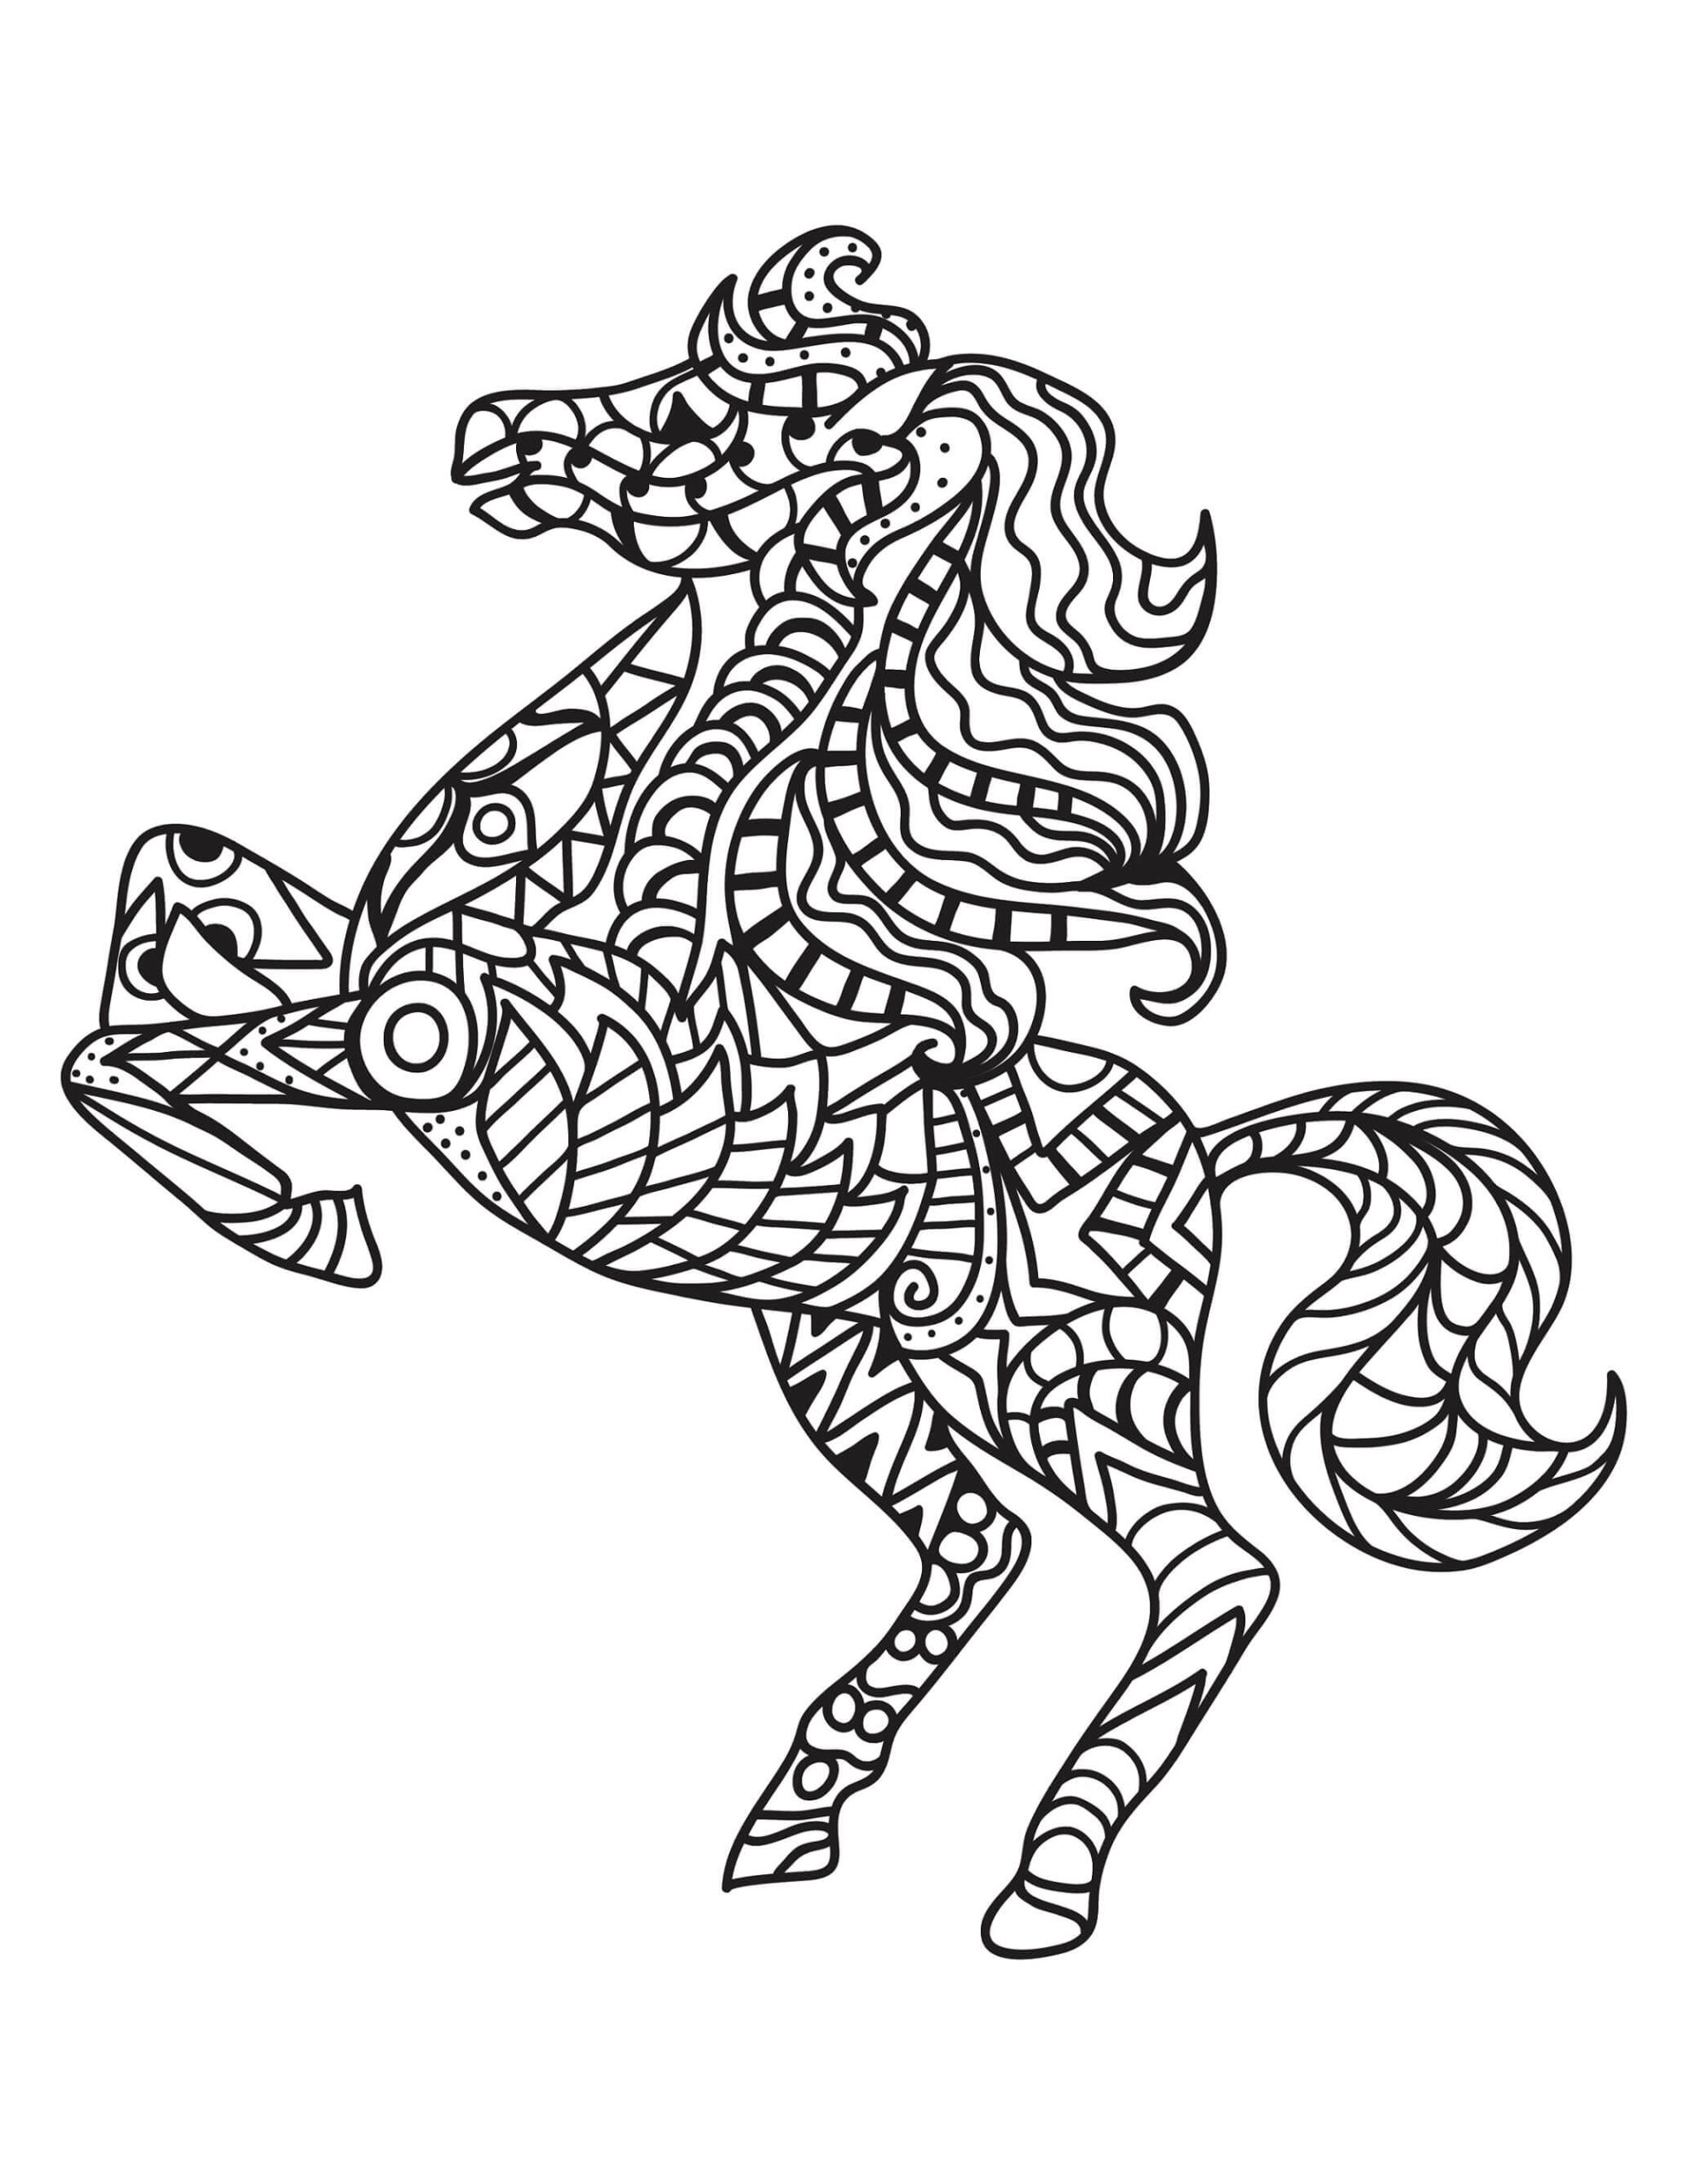 Mandala Horse Coloring Page – Sheet 6 Mandala